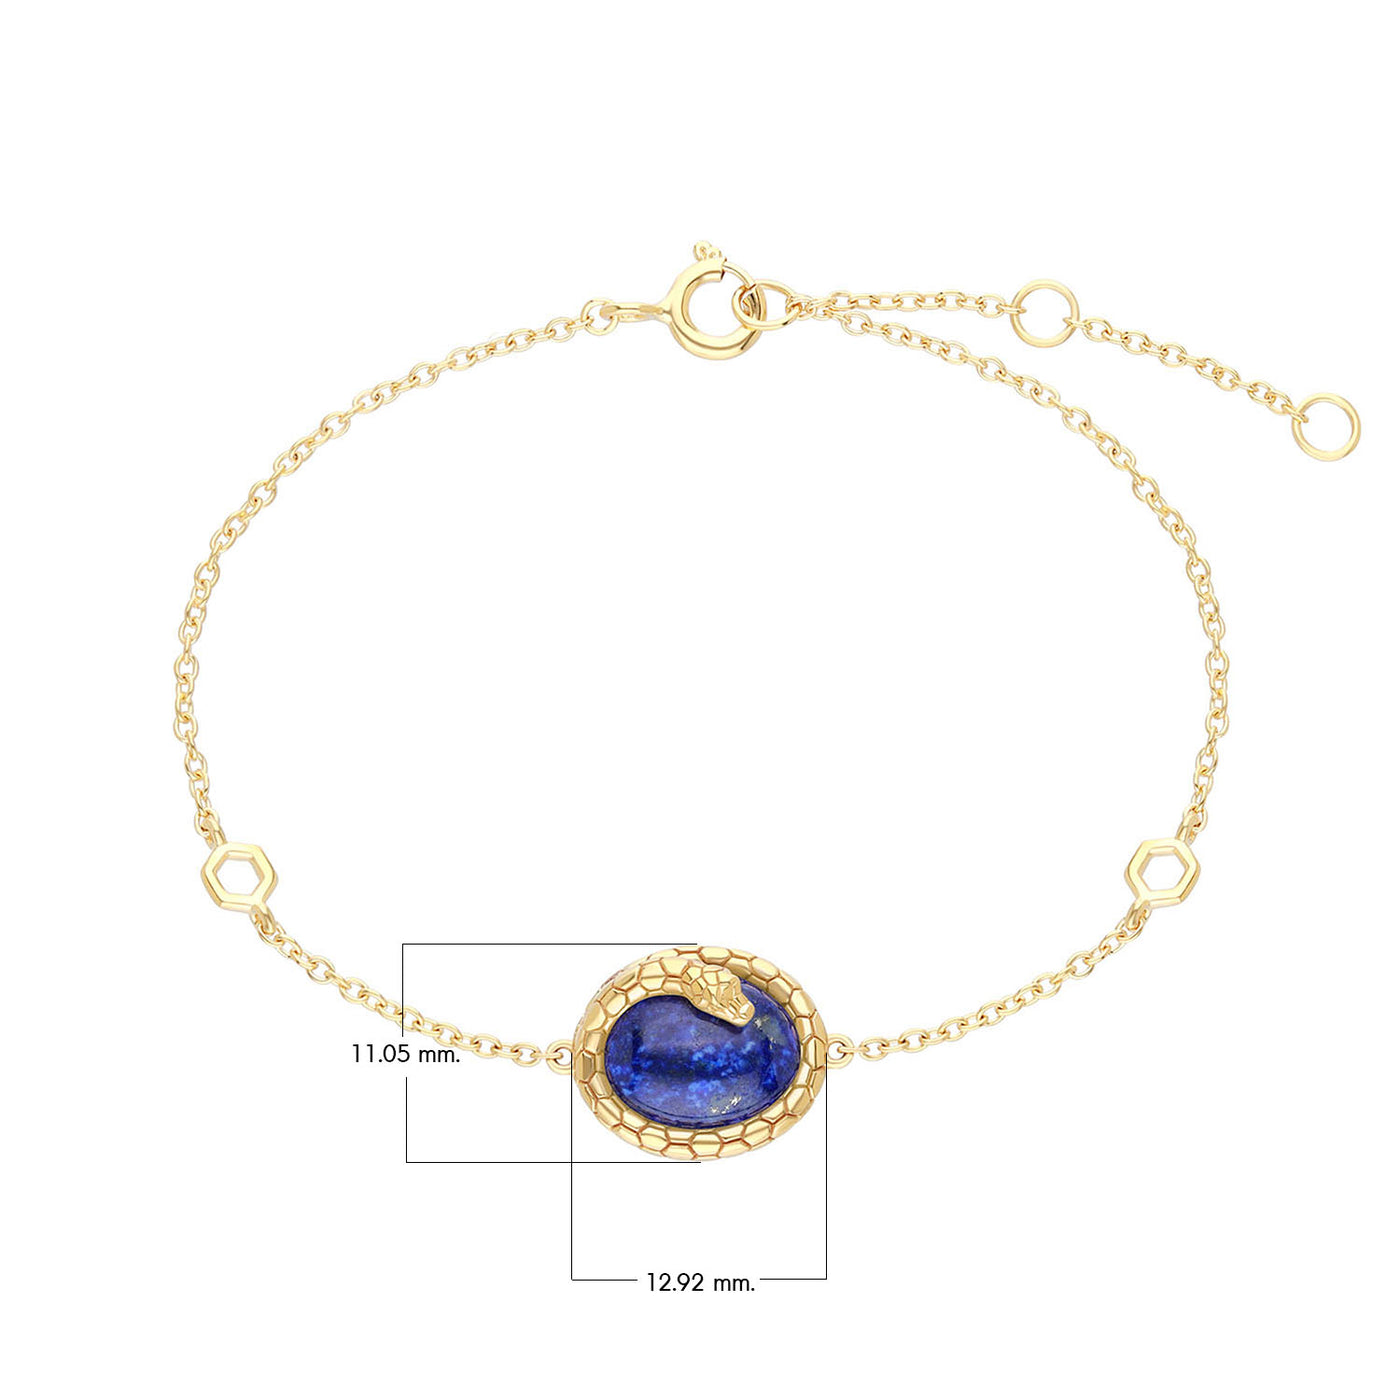 The Ruler Sterling Silver 925 Oval Lapis Lazuli Winding Snake Bracelet